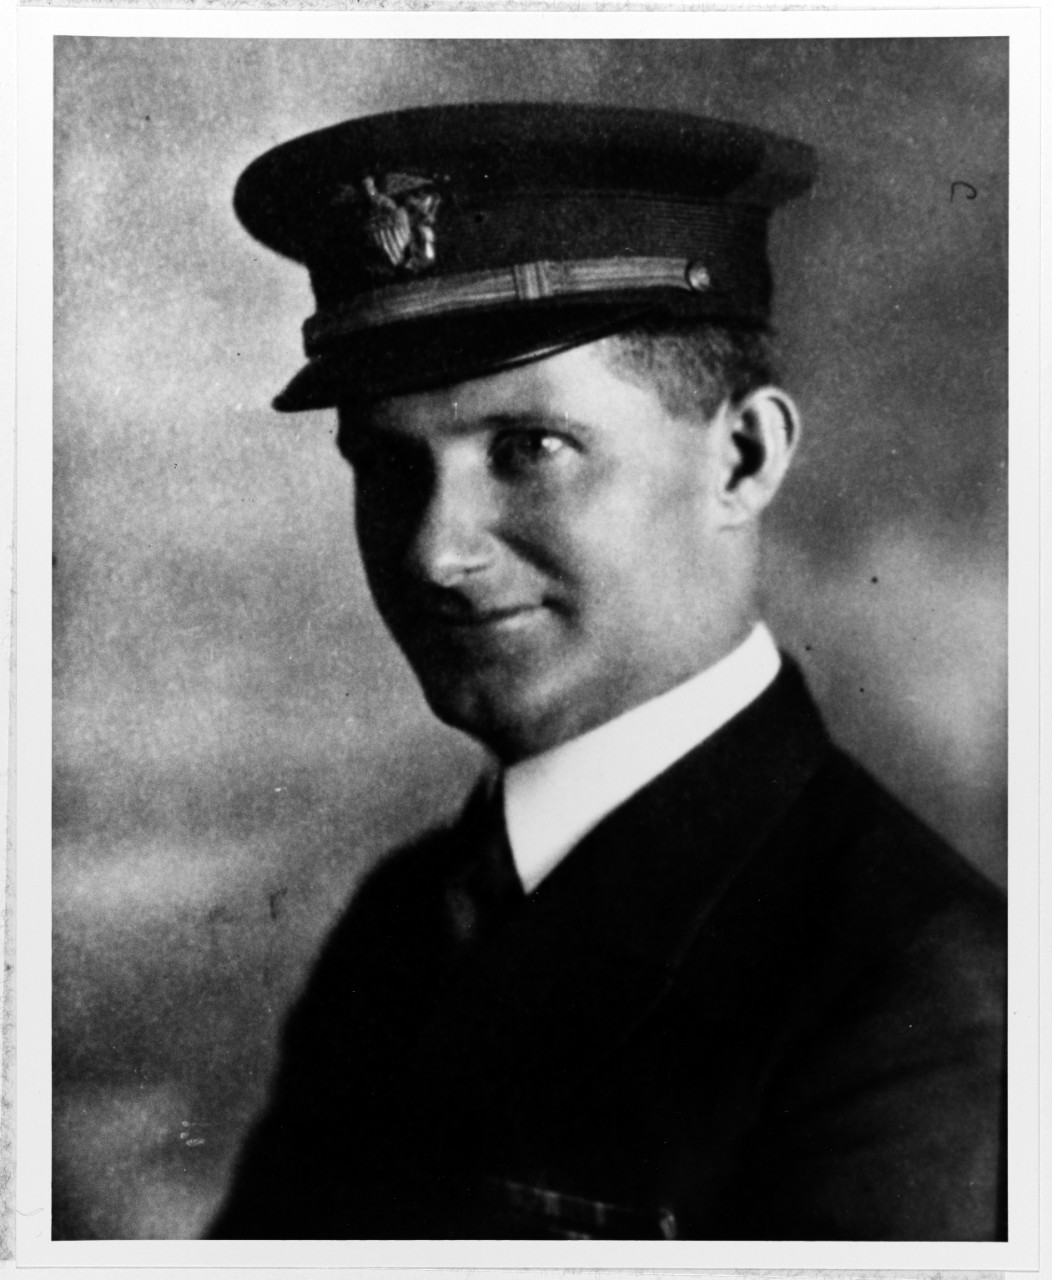 Chief Boatswain William H. Justice, USN